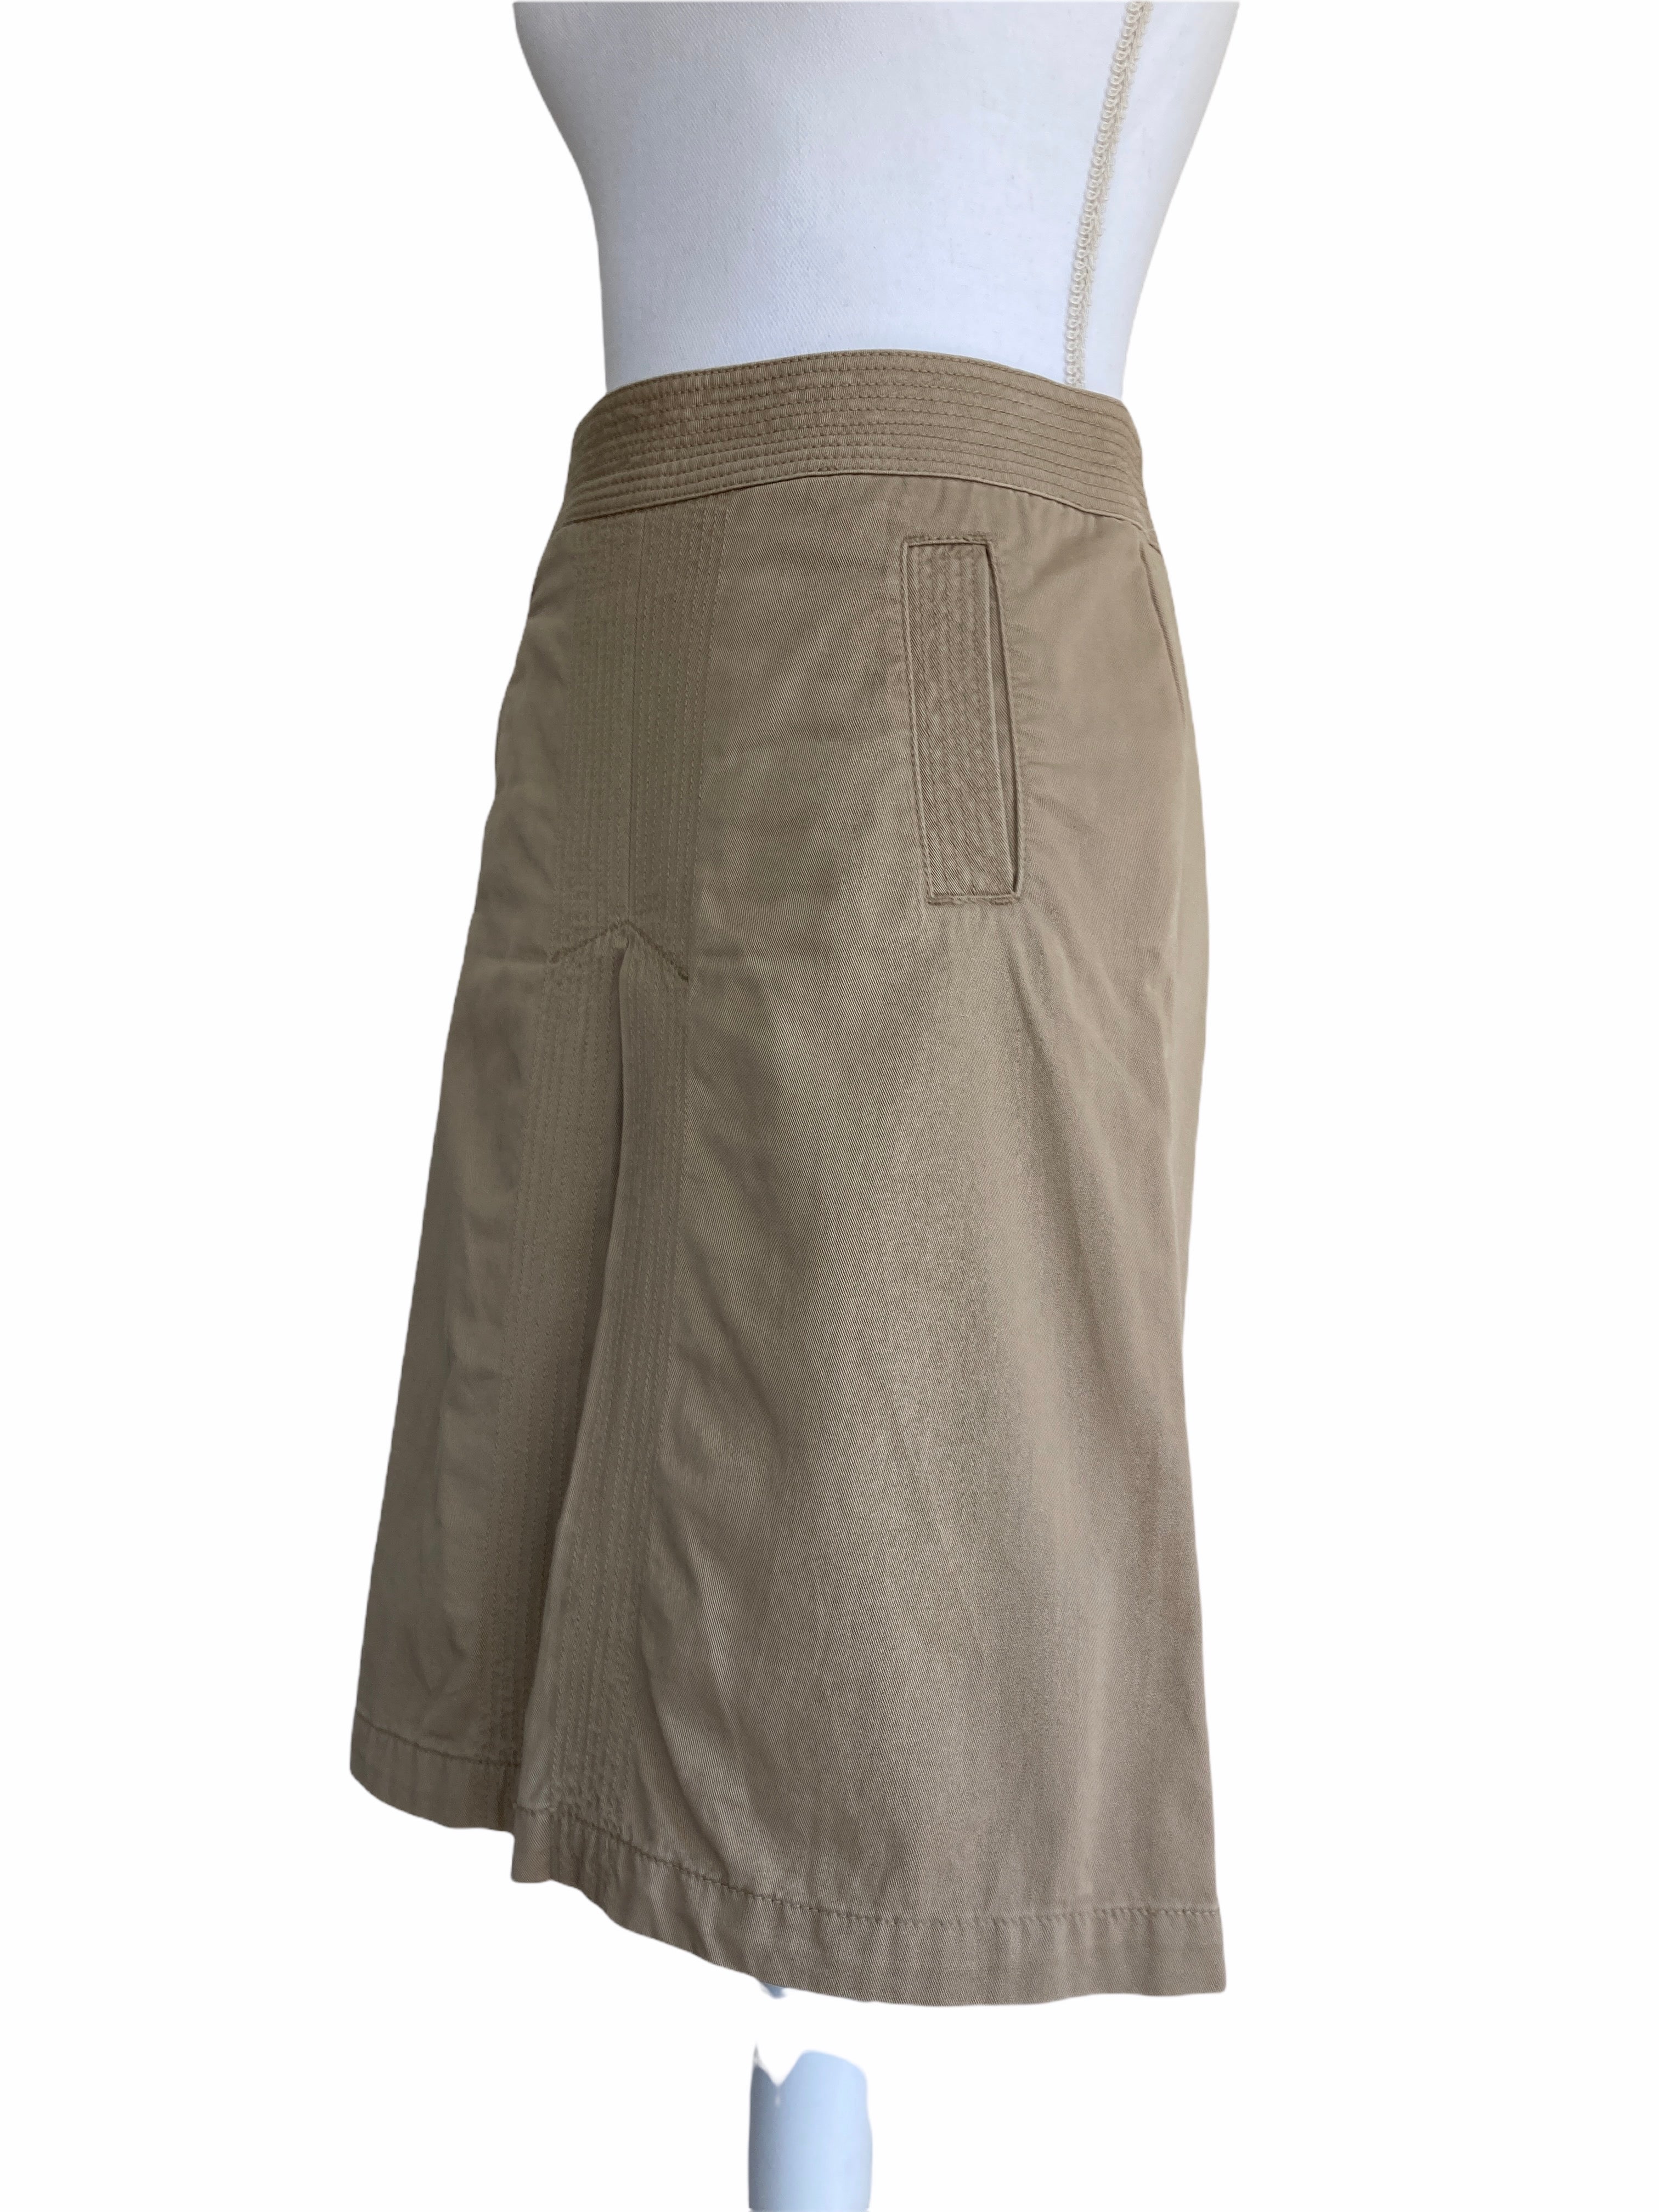 J. Crew Khaki Skirt, 0